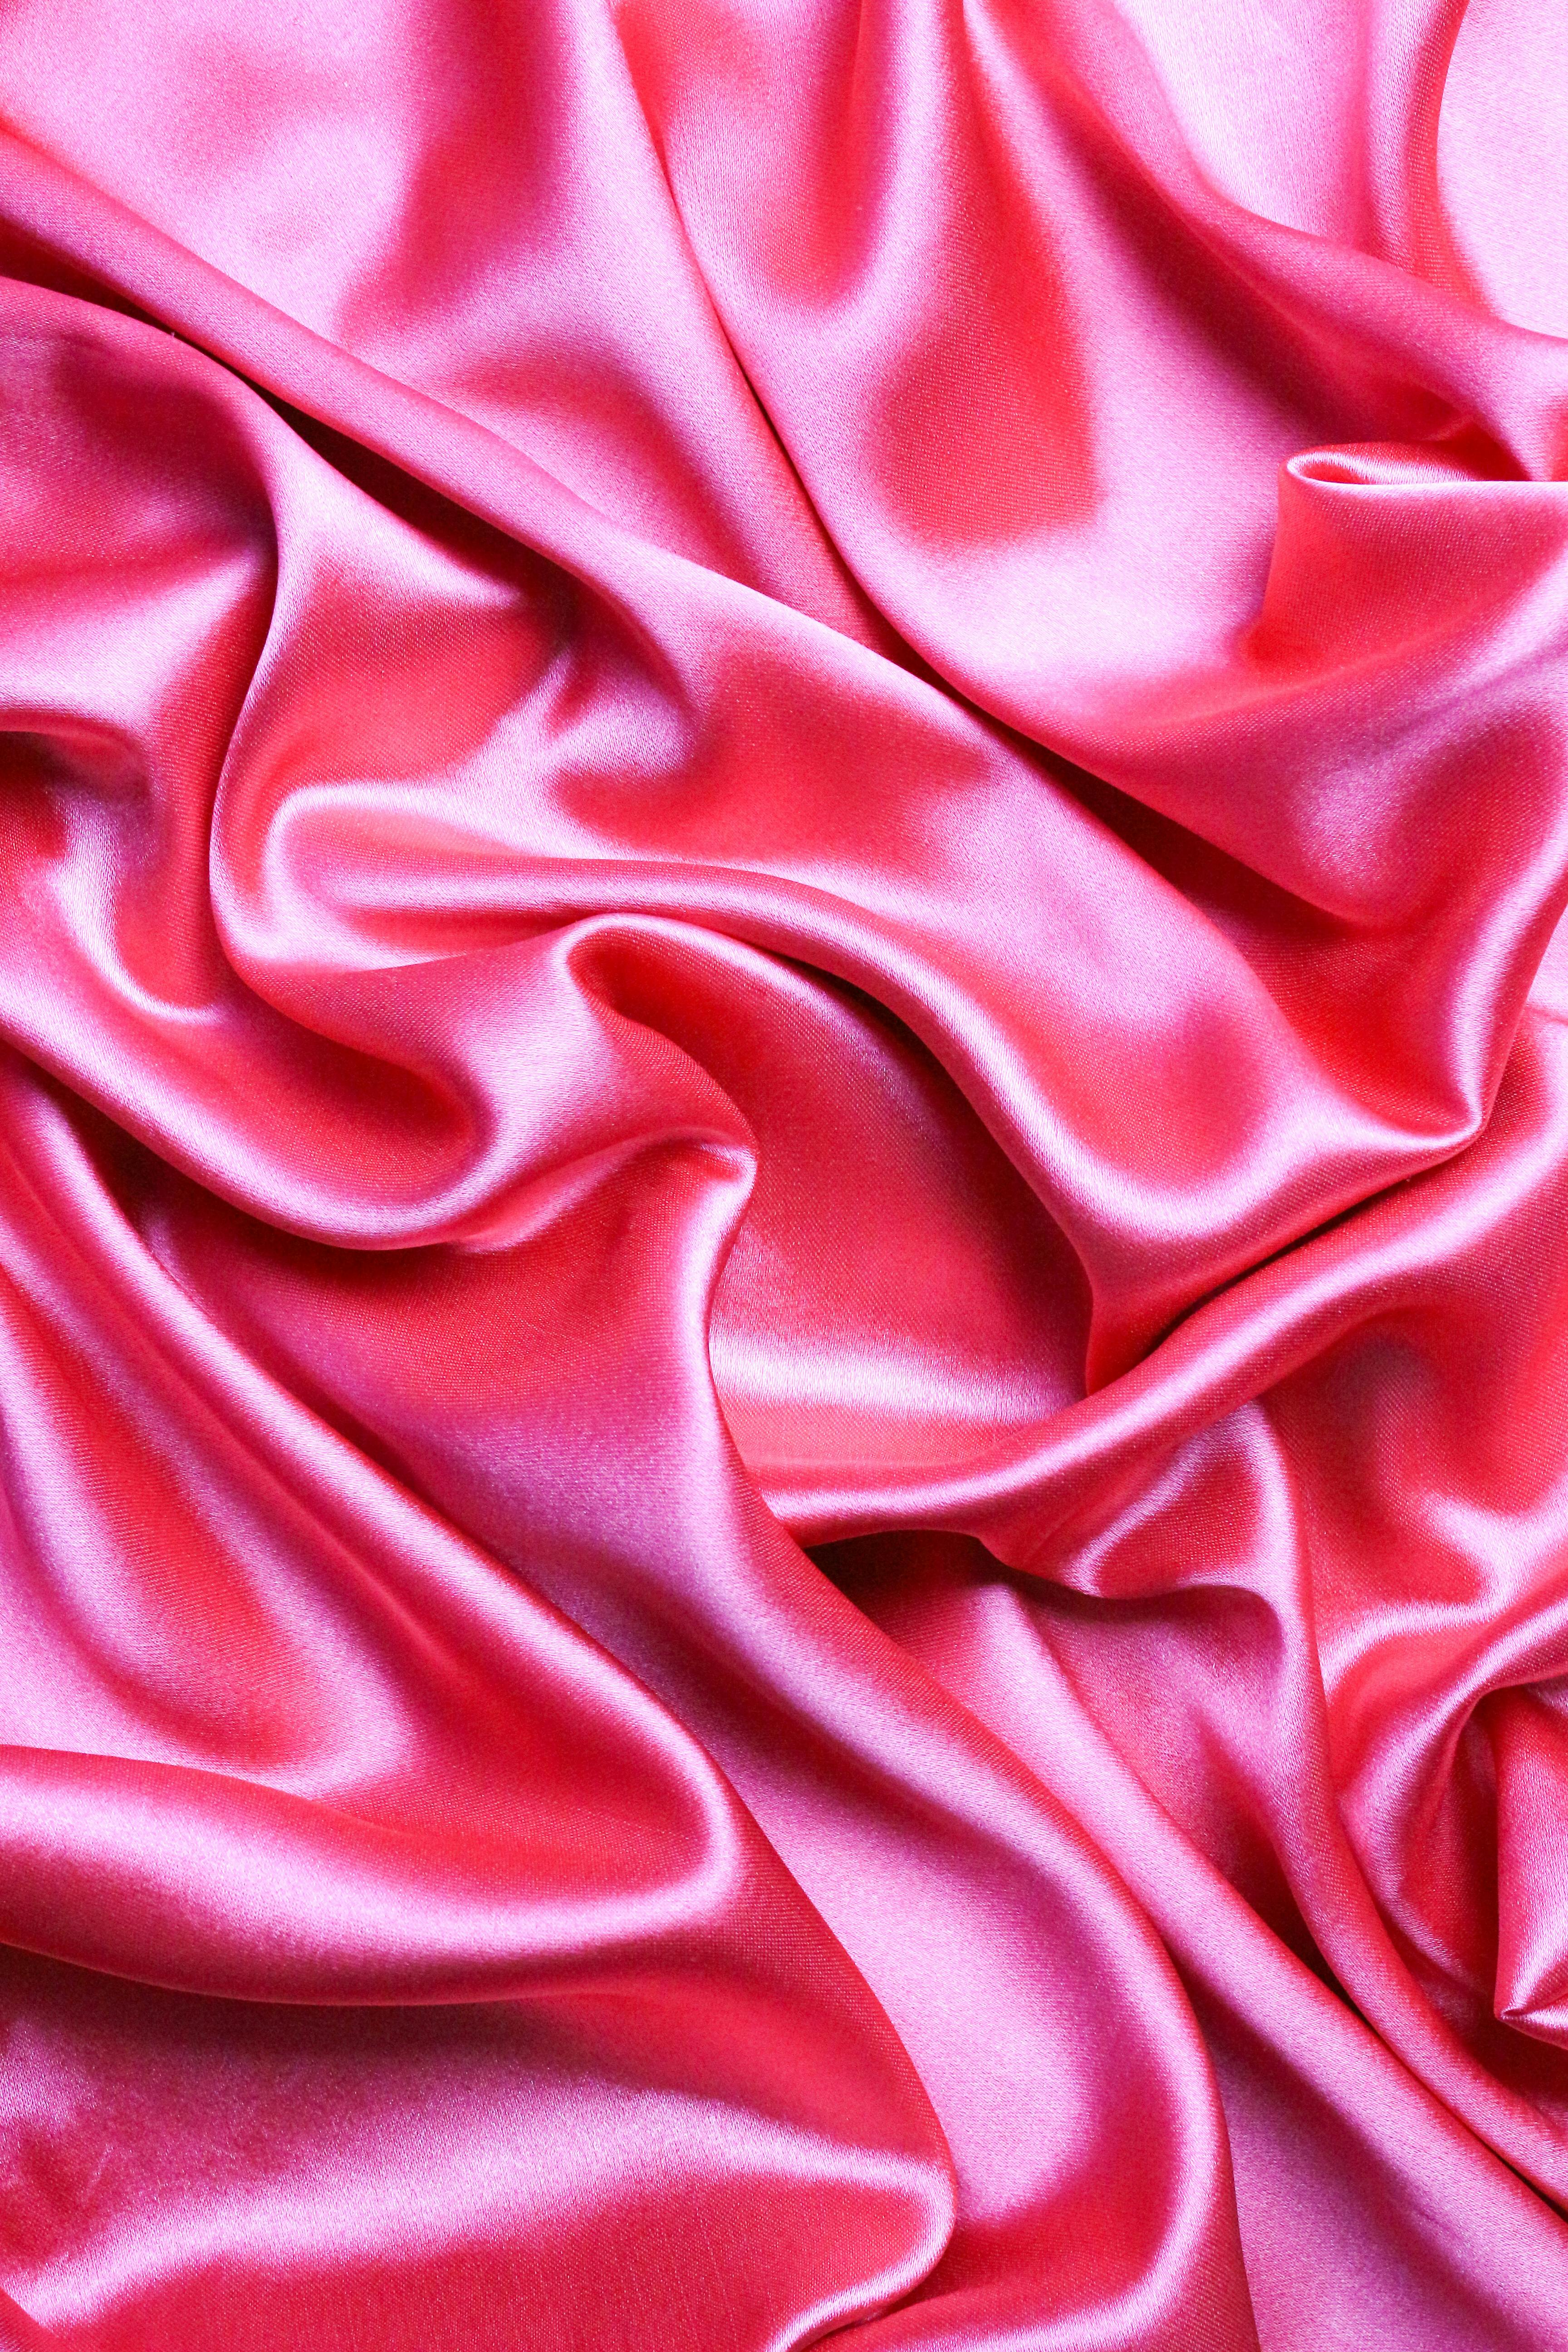 Desarmamiento Pesimista Obsesión Close Up of Rippled Pink Satin Fabric · Free Stock Photo